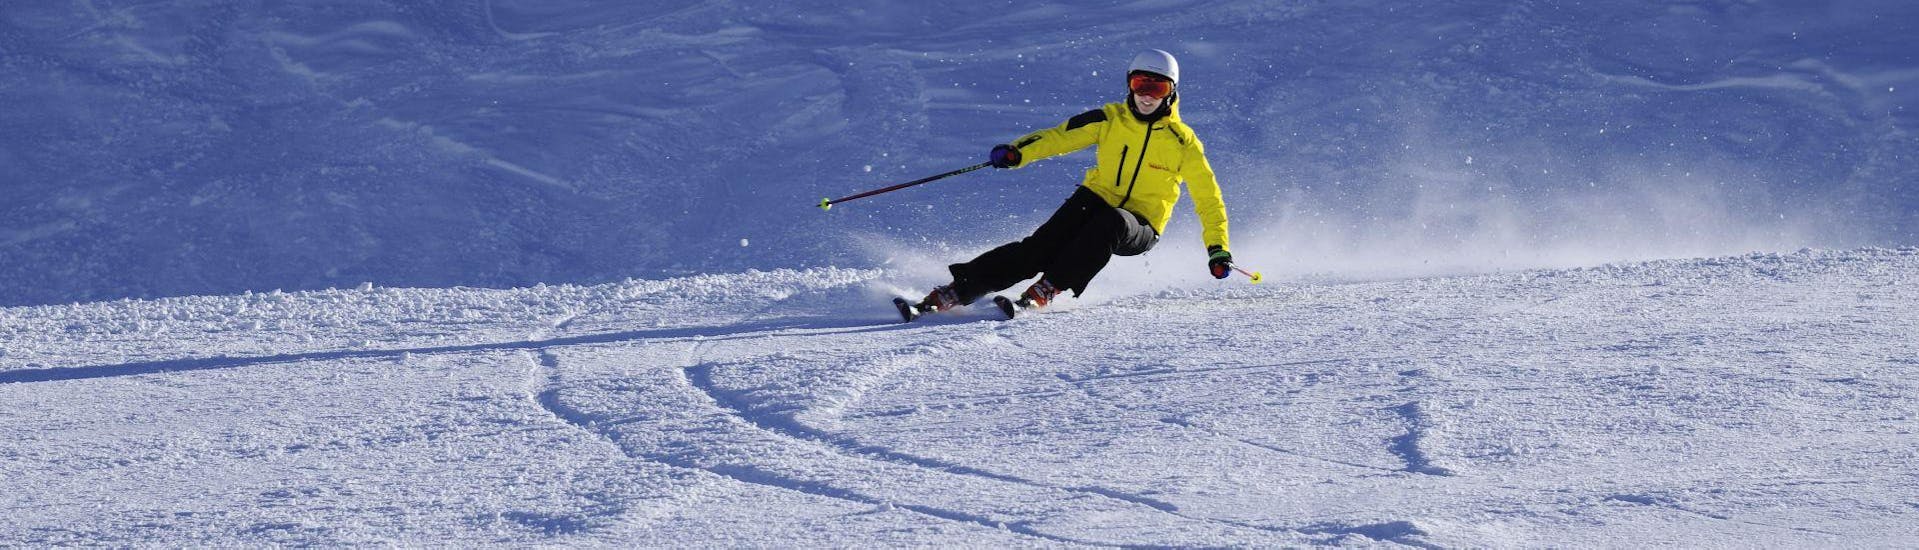 Teens Ski Lessons (12-16 y.) for All Levels with Skischool Ecki Kober Brauneck-Lenggries - Hero image